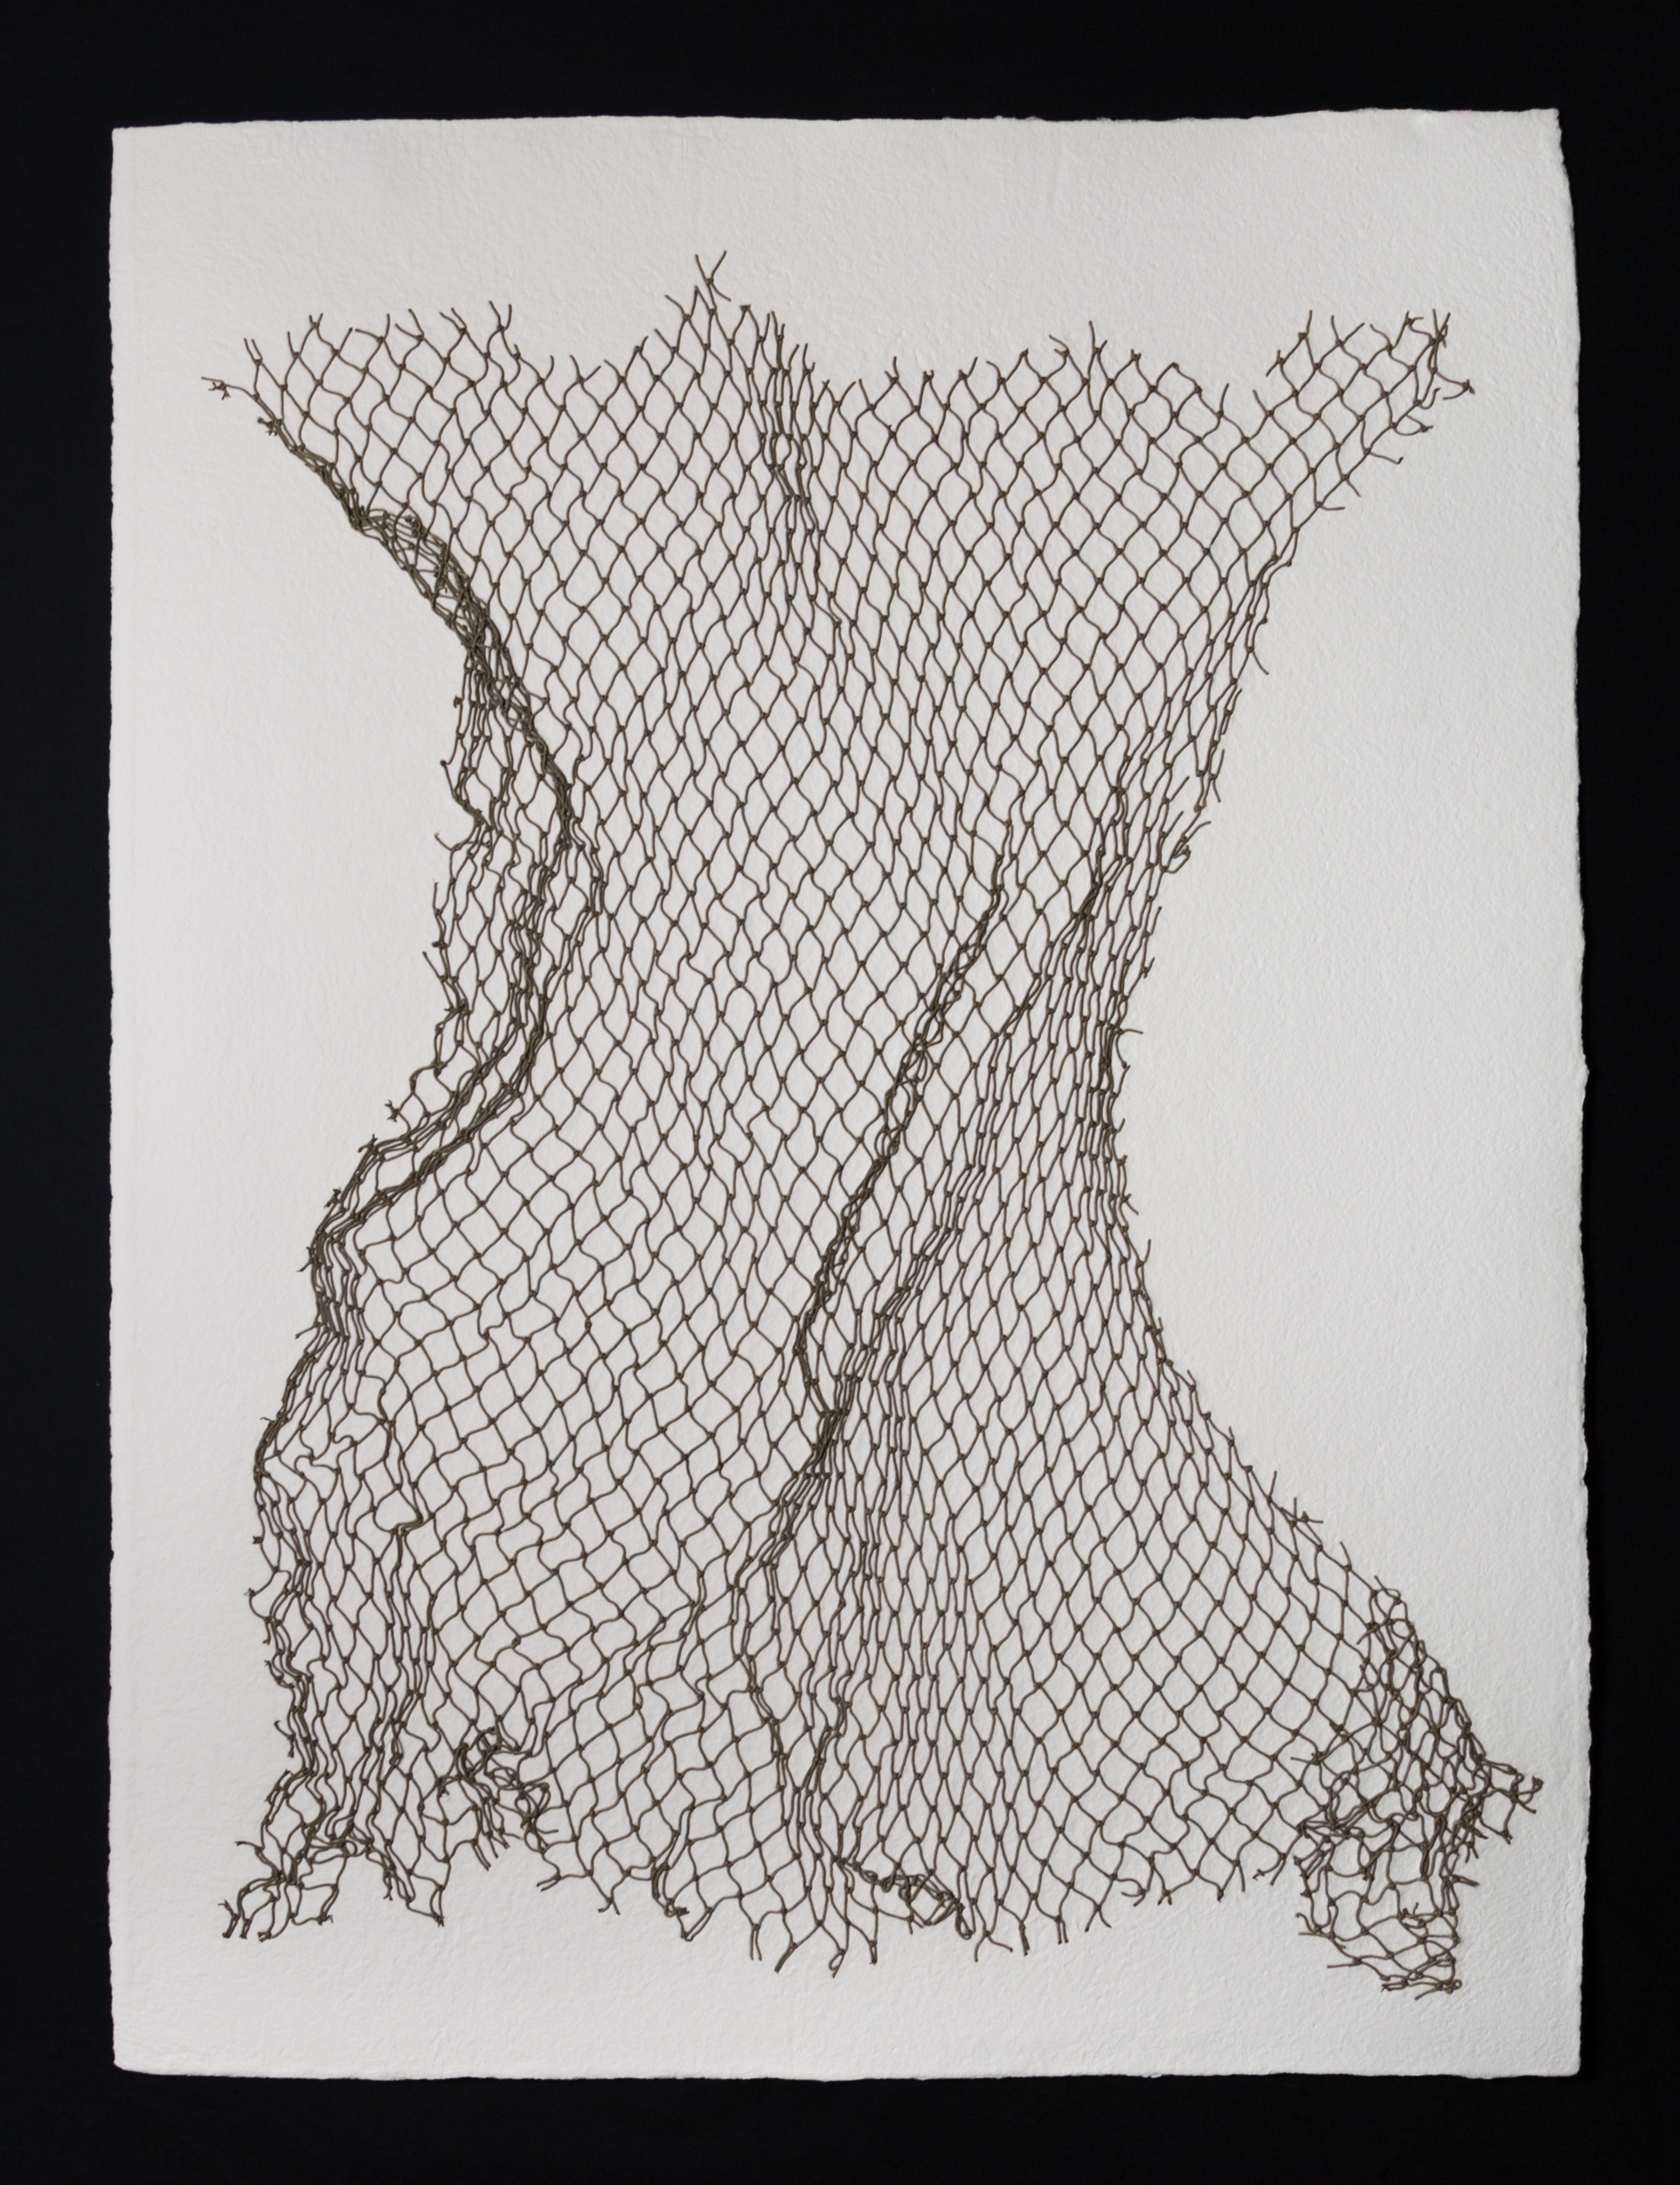   Net II , 2017, cotton paper and nylon net, 40" x 30" 